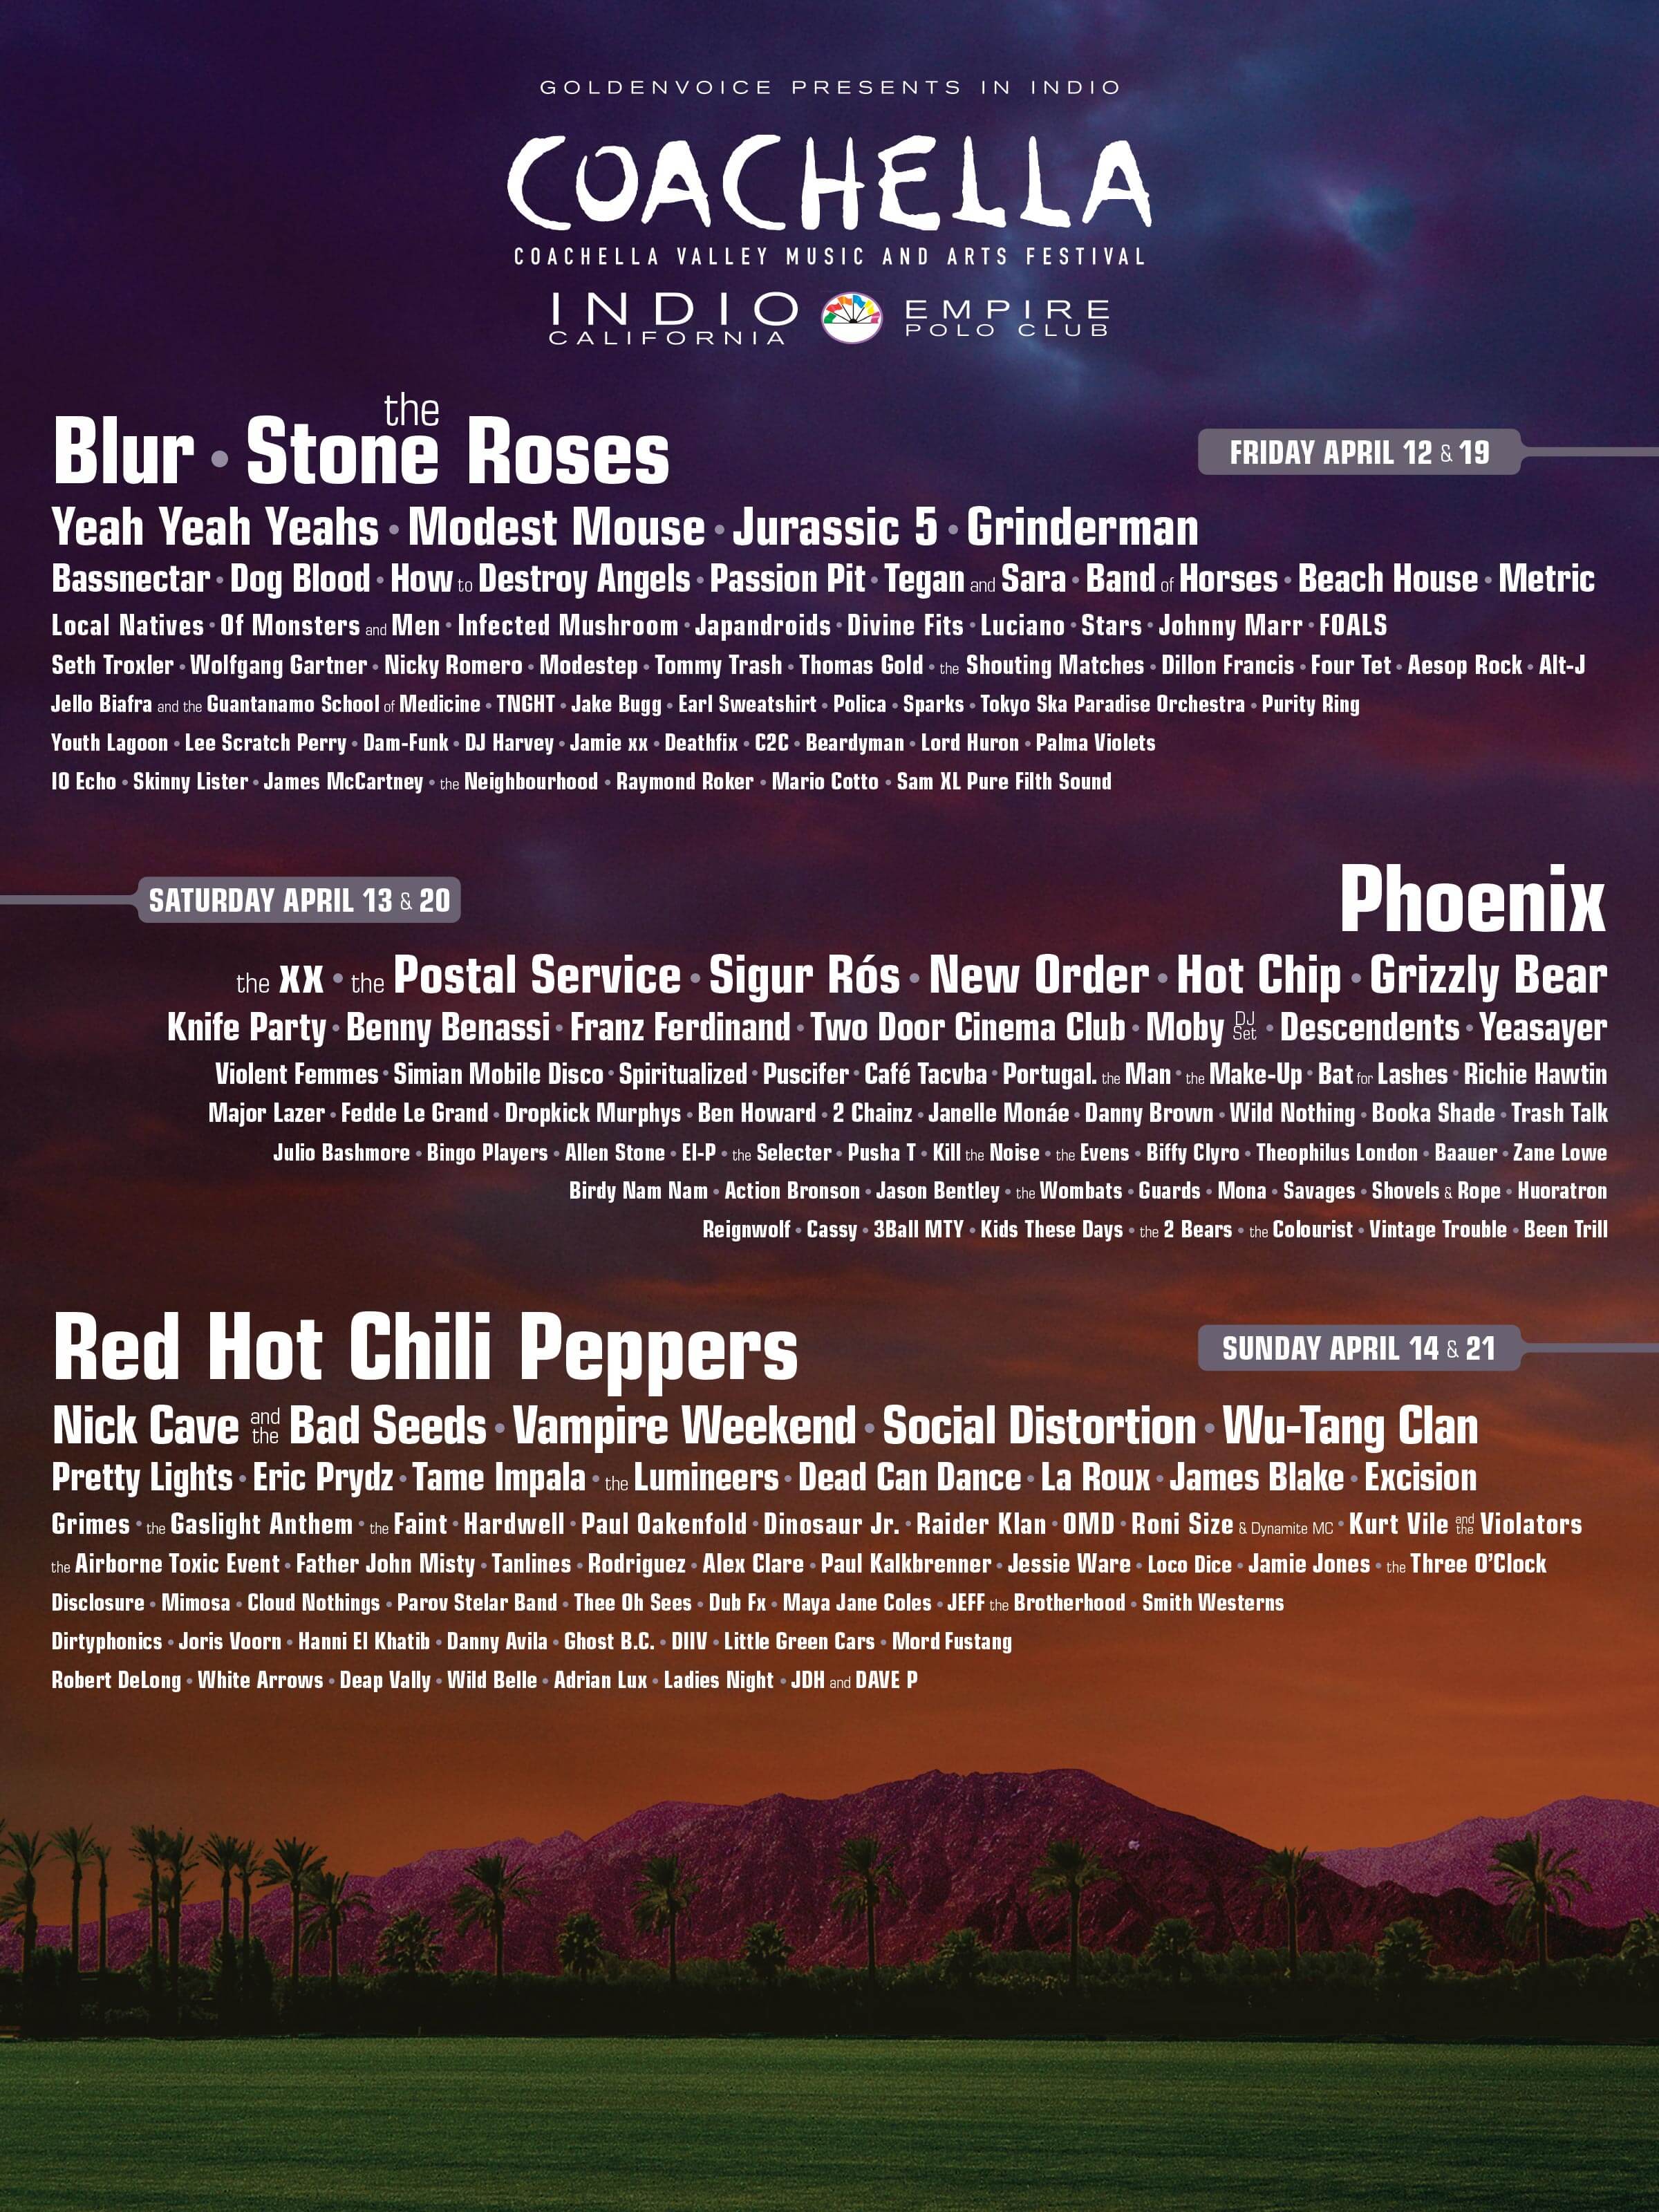 Coachella 2013 Lineup Poster